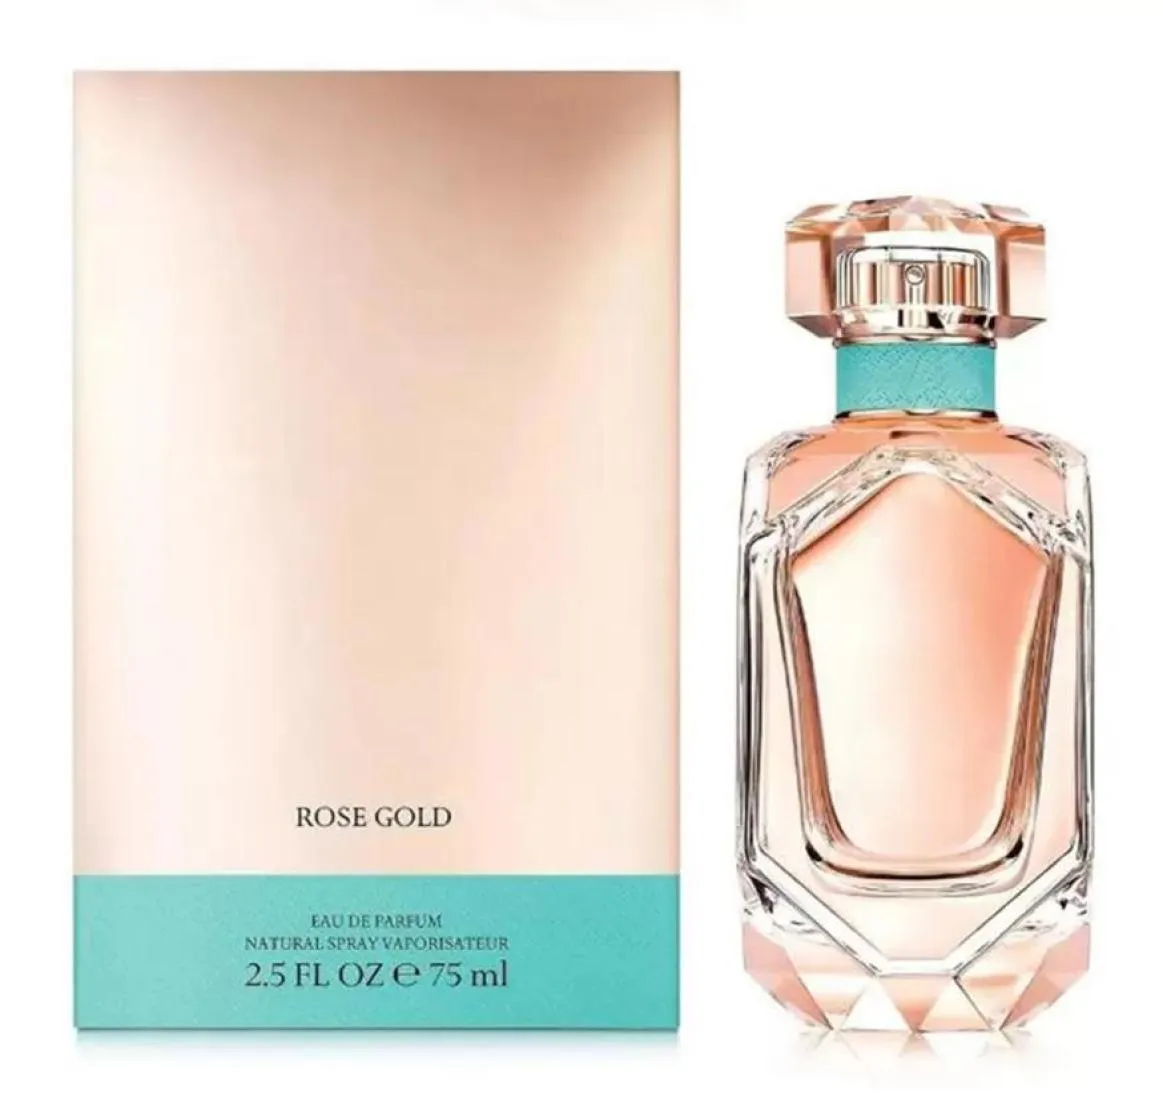 woman perfume lady perfume diamond rose gold spray 75ml Eau de Parfumfloral note charming deodorant fast ship9504579